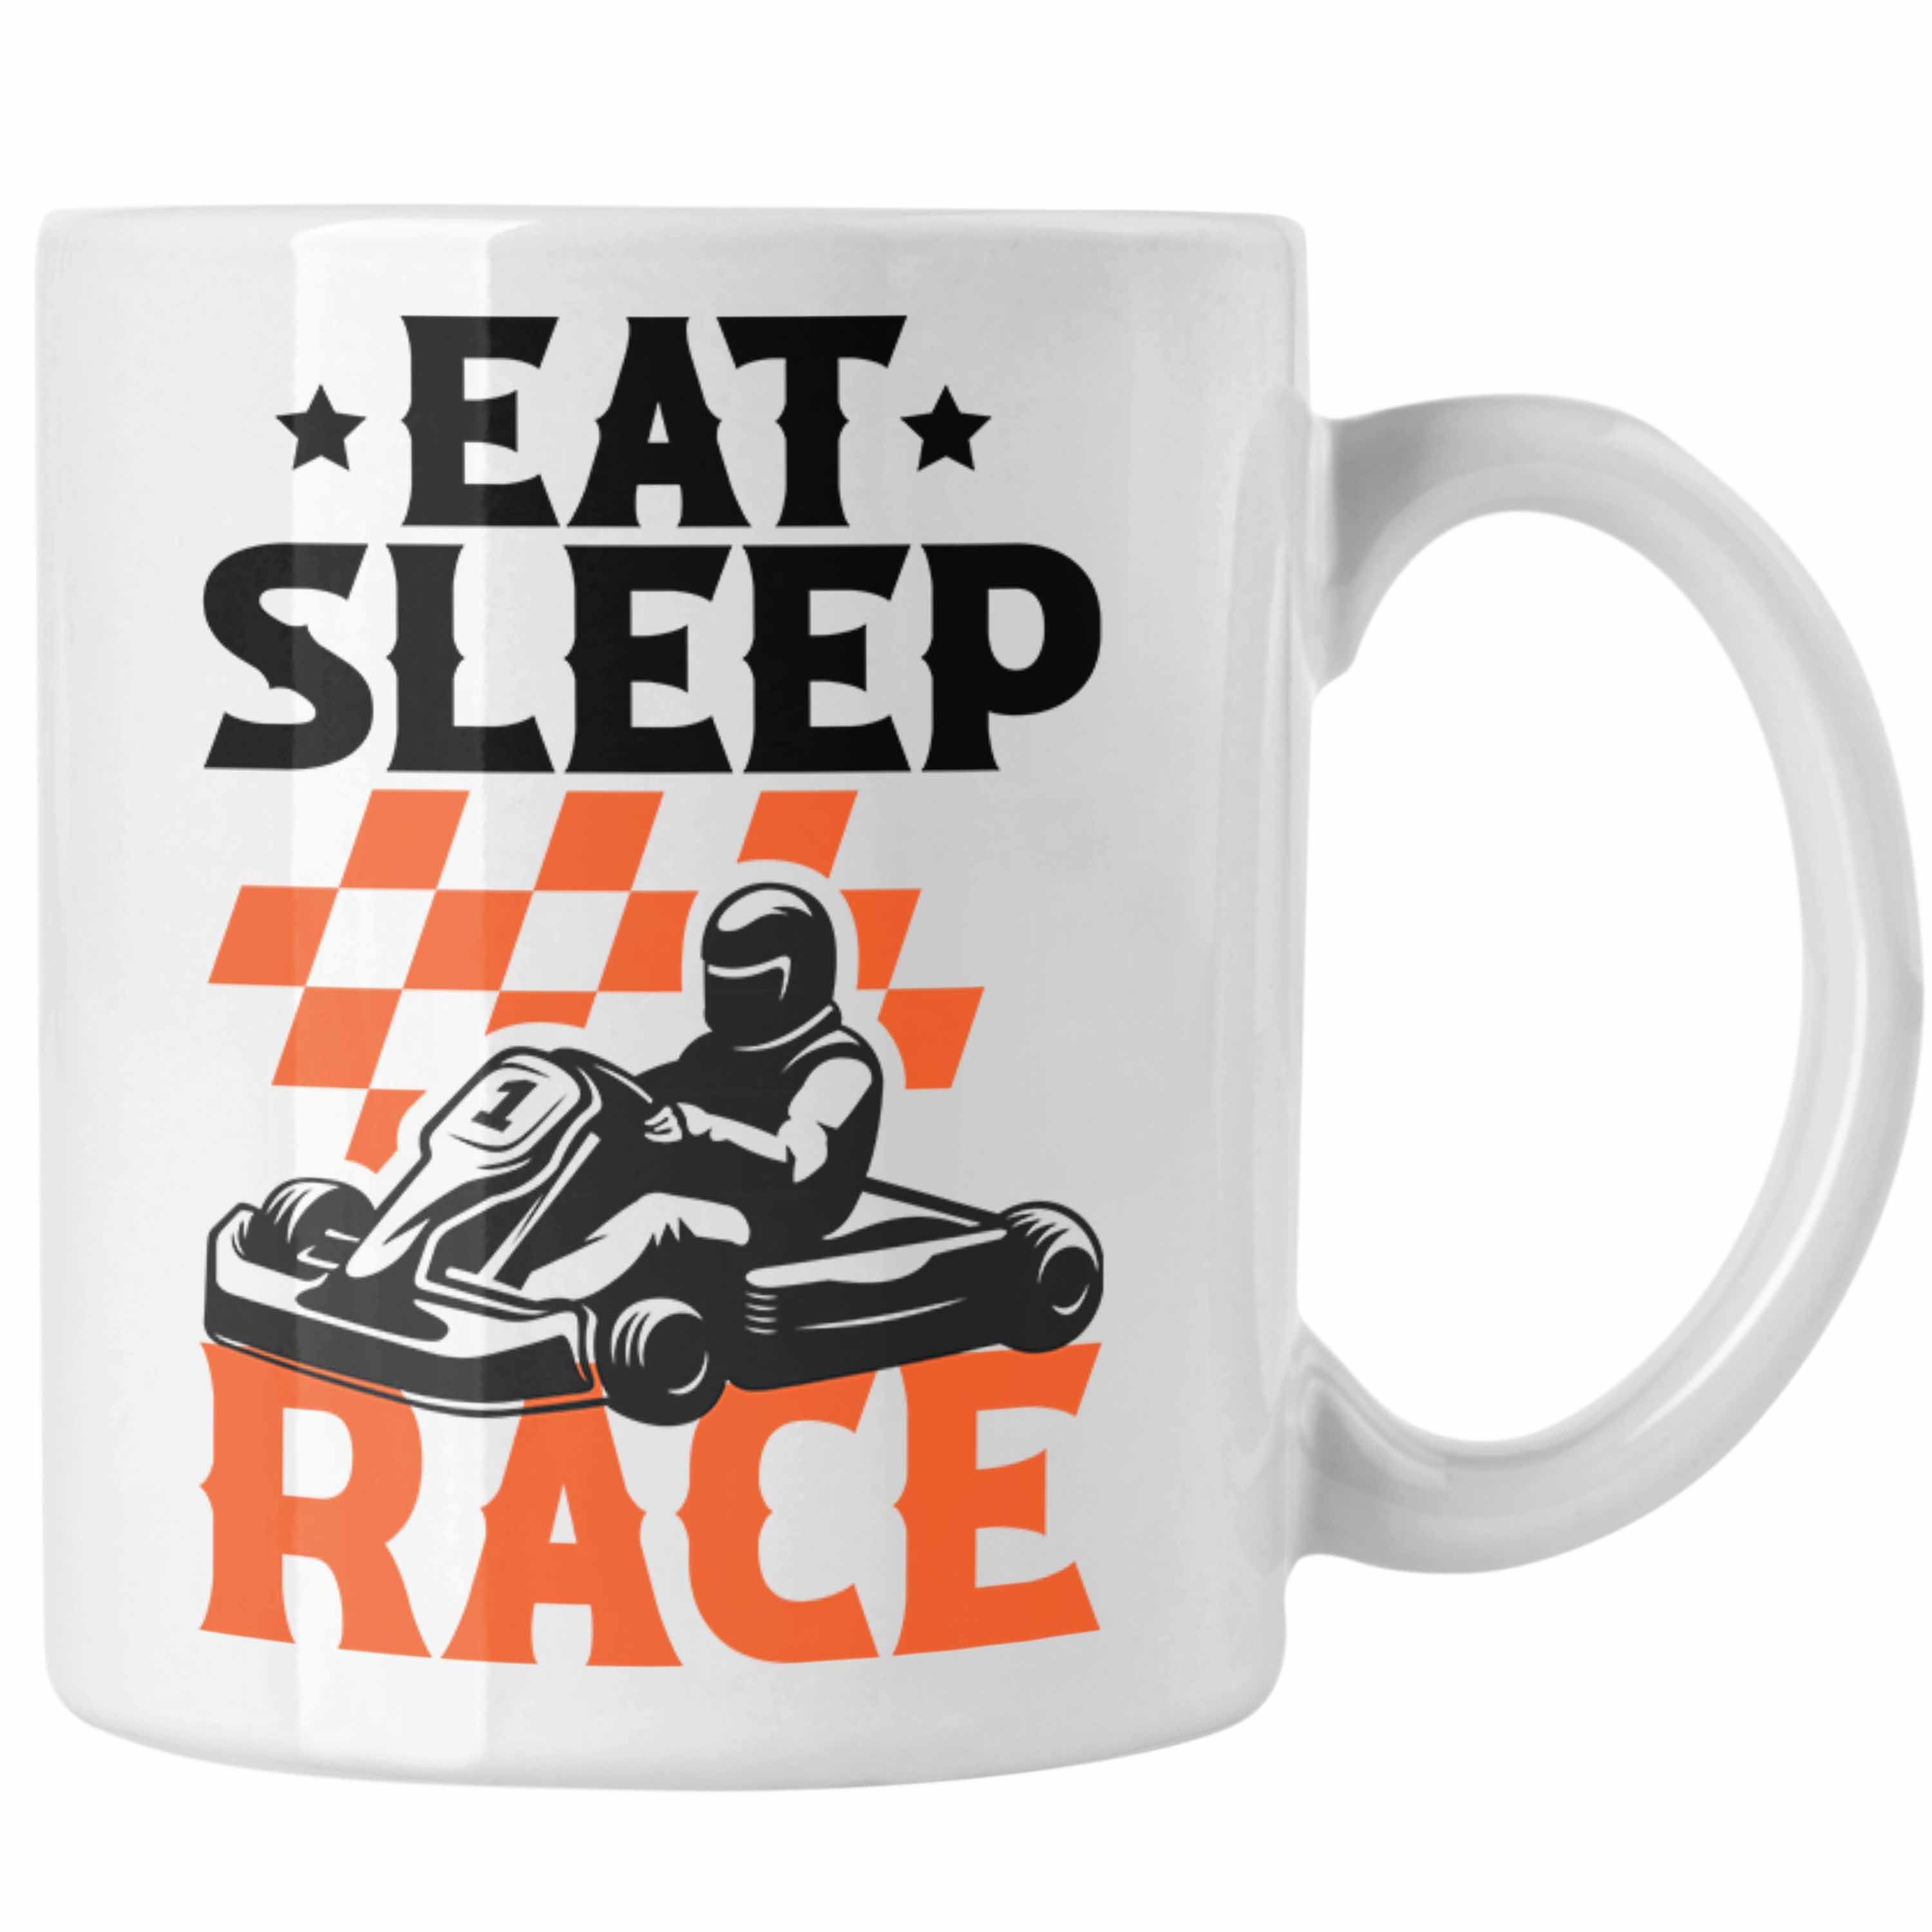 Sleep Racing Kart Geschenk Trendation Trendation Eat Race Tasse Weiss Tasse Fahrer - Rennfahrer Gokart Go